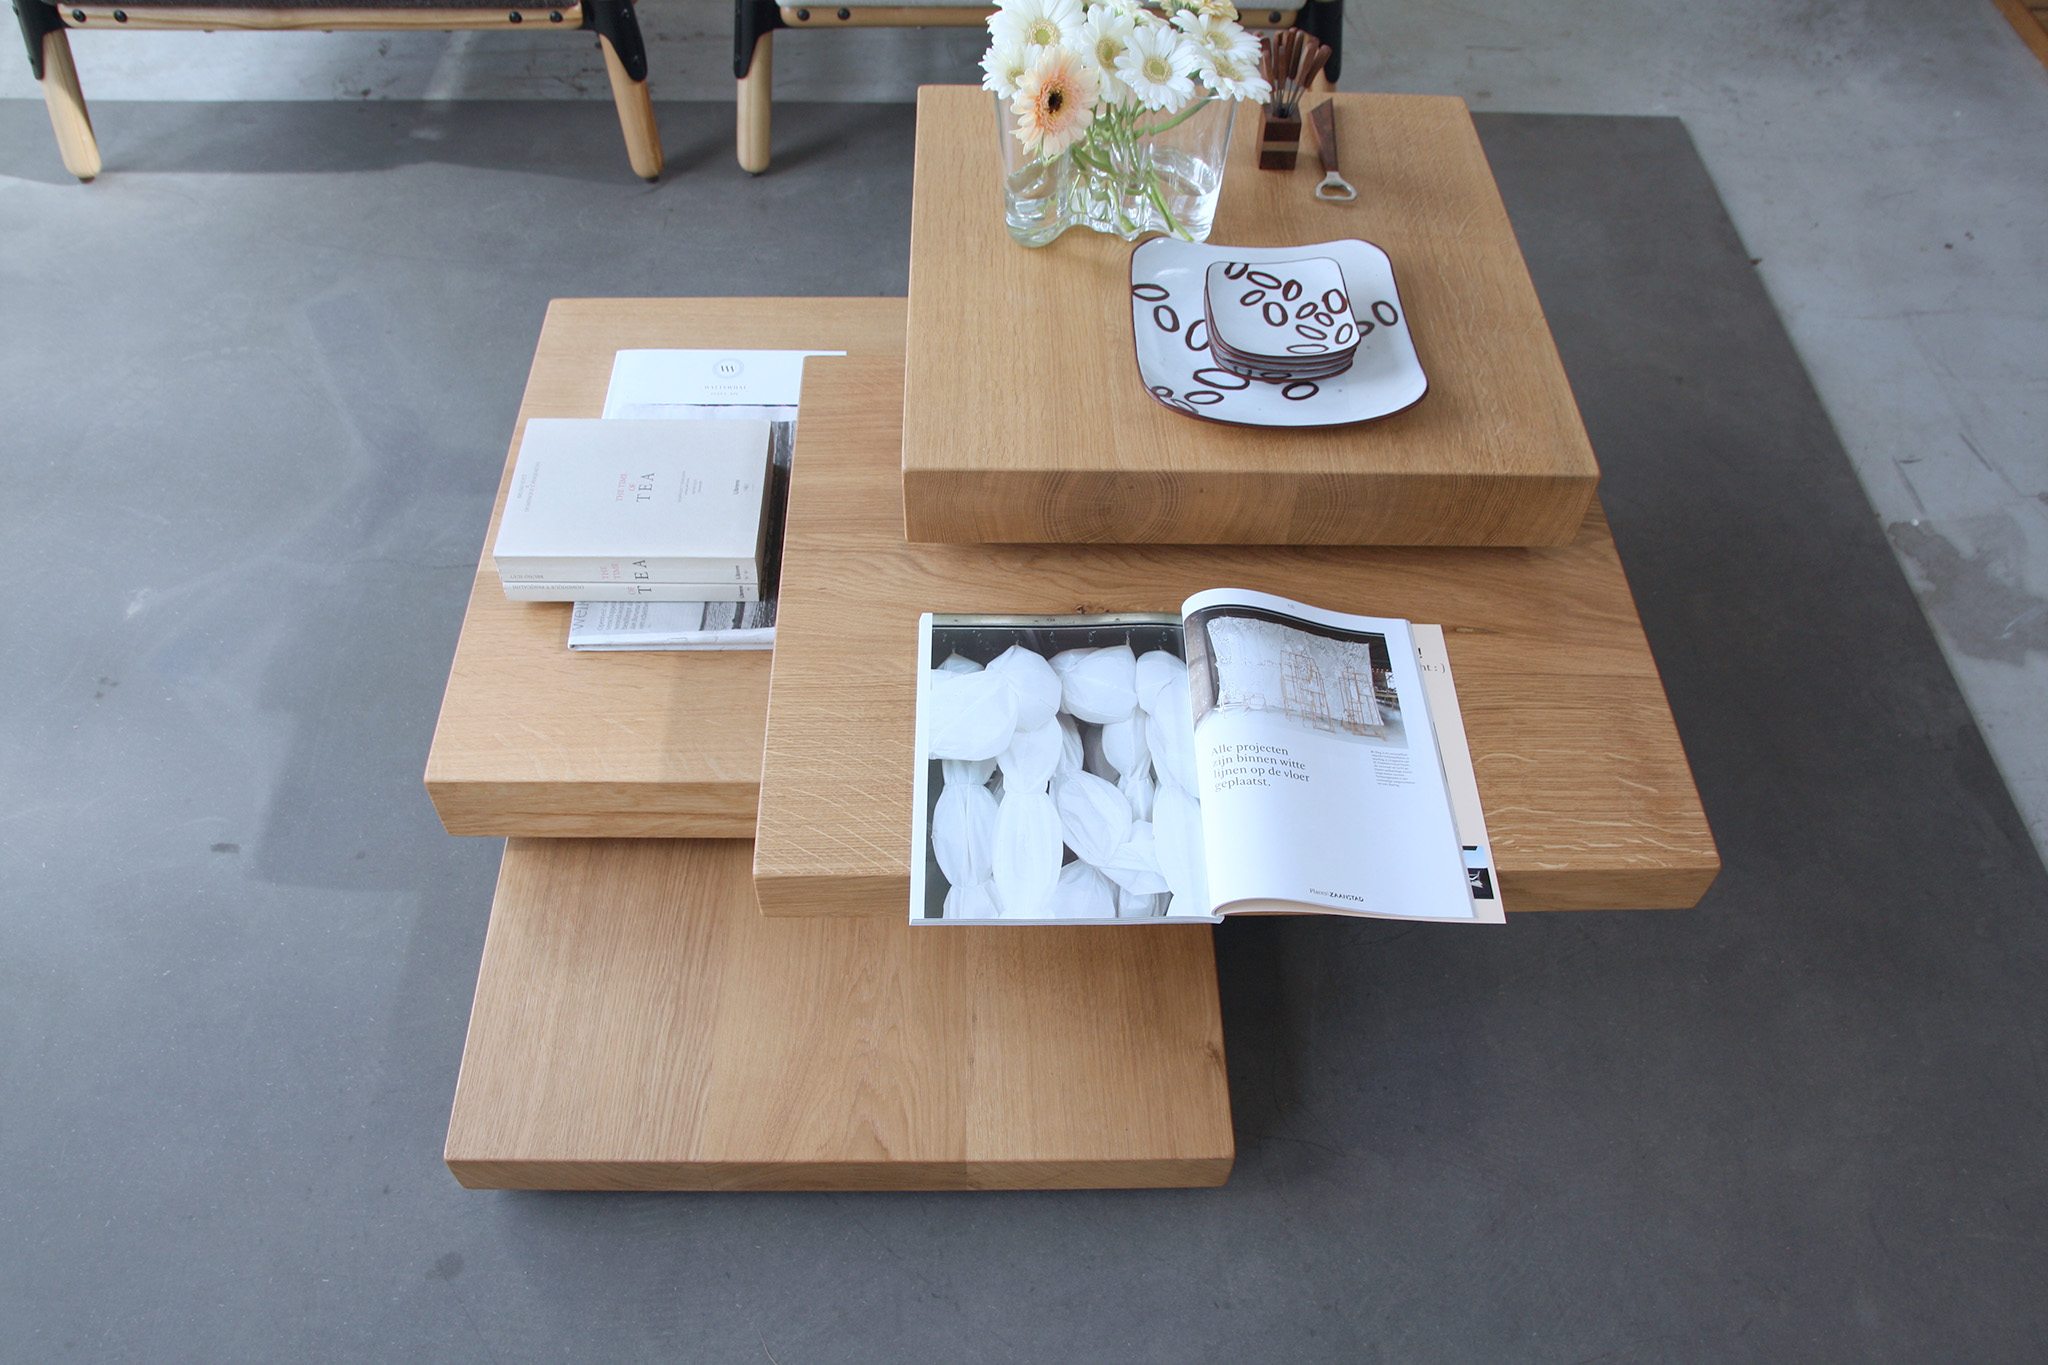 salontafel / ontwerp uit 2015 van Joeri Koolhoven